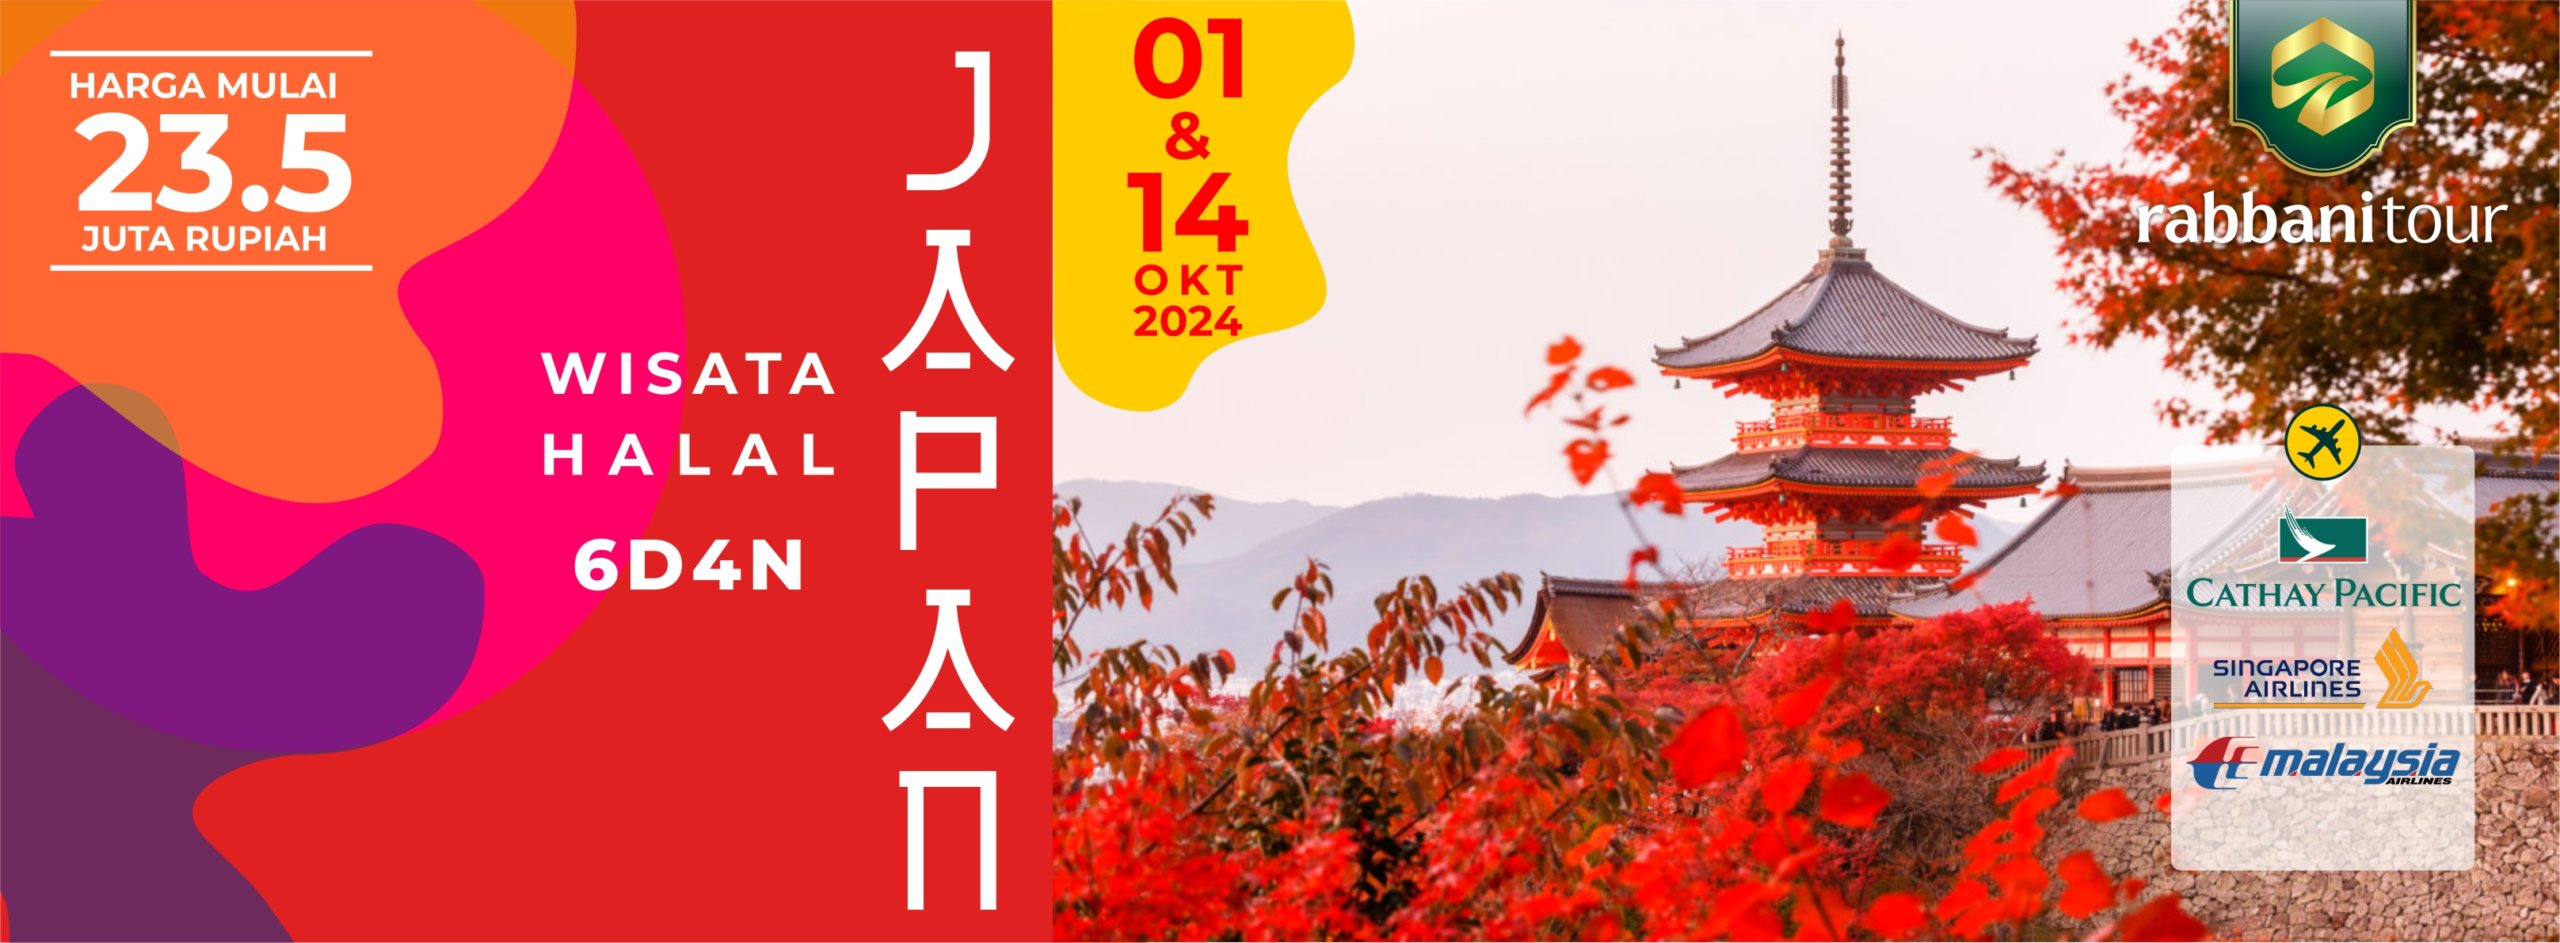 Wisata Halal Jepang Oktober 2024 scaled - Rabbanitour